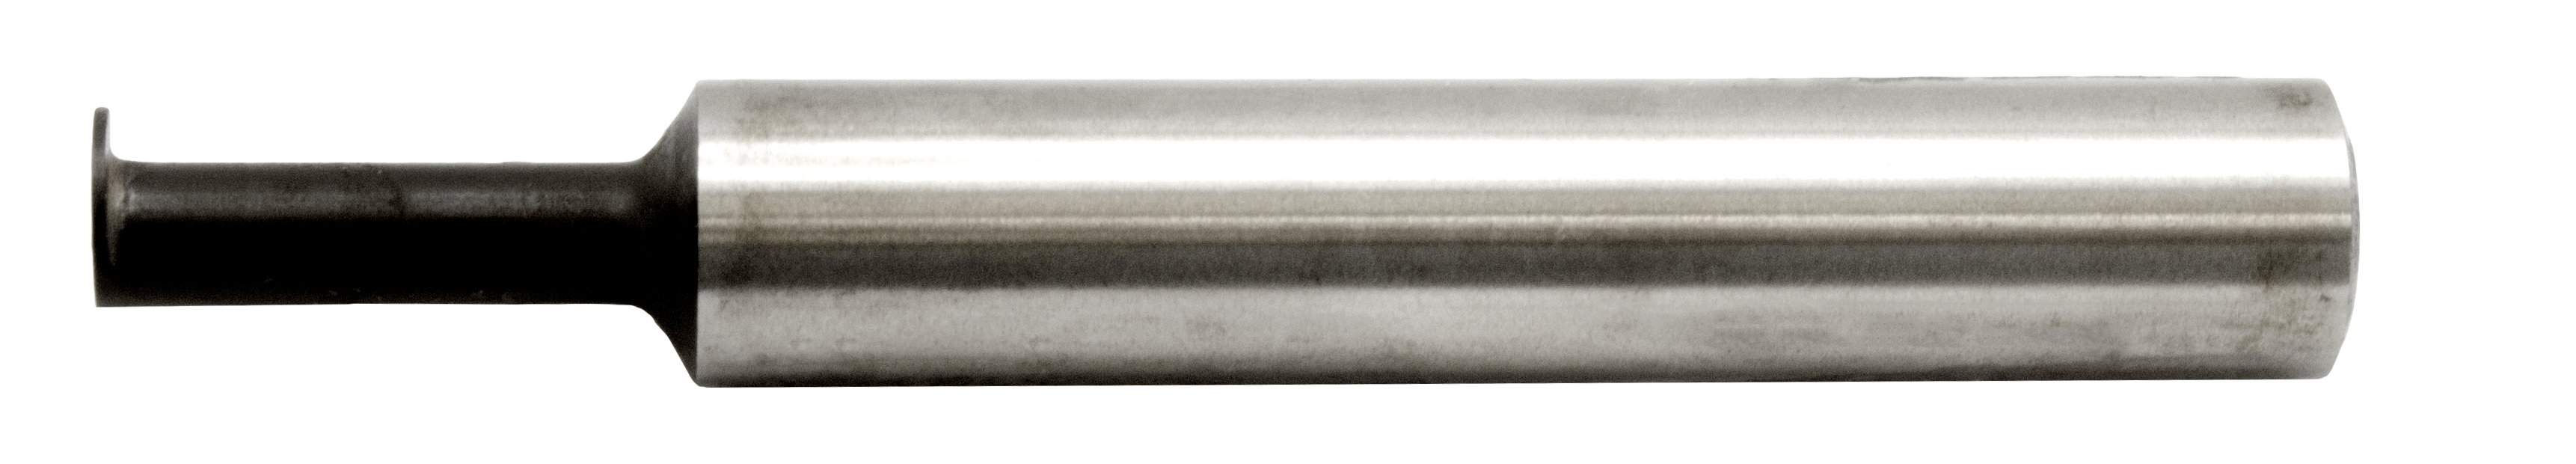 Recessing Tools Long Length 3/8 Shank Carbide Tipped